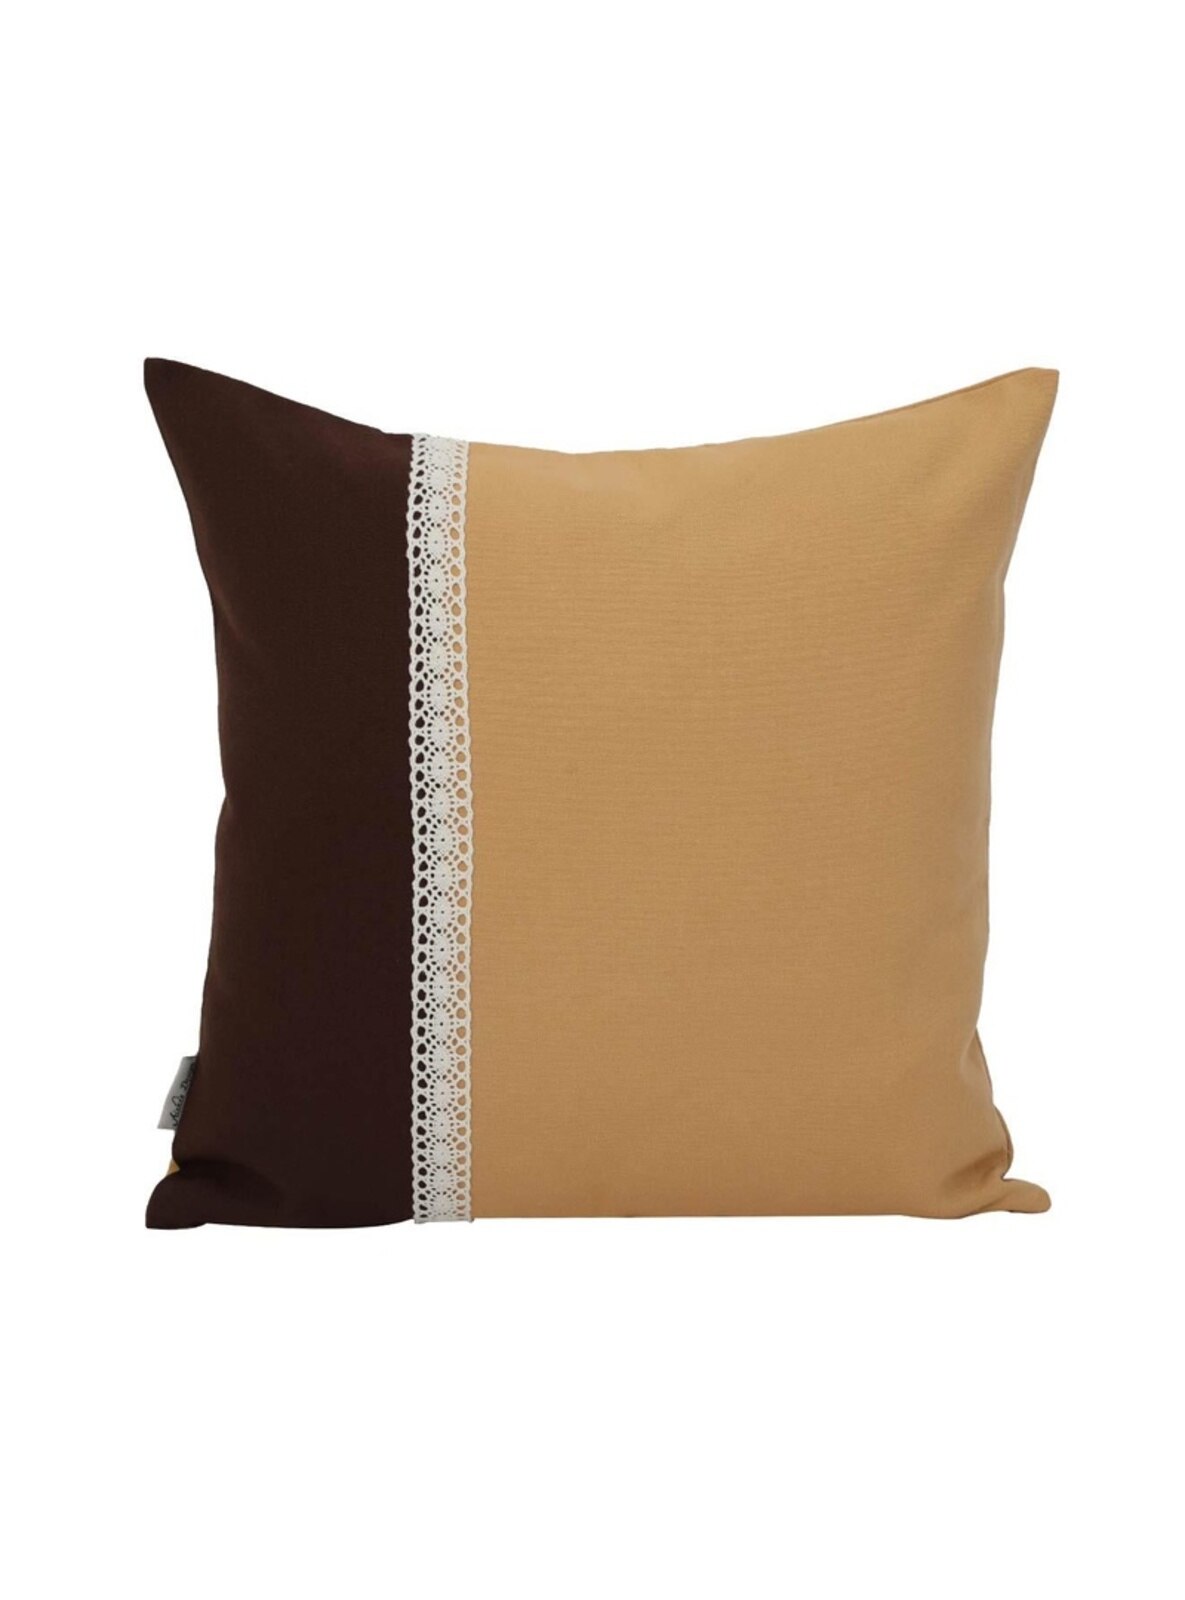 Ayşe Türban Tasarım Home Mustard Throw Pillow Covers